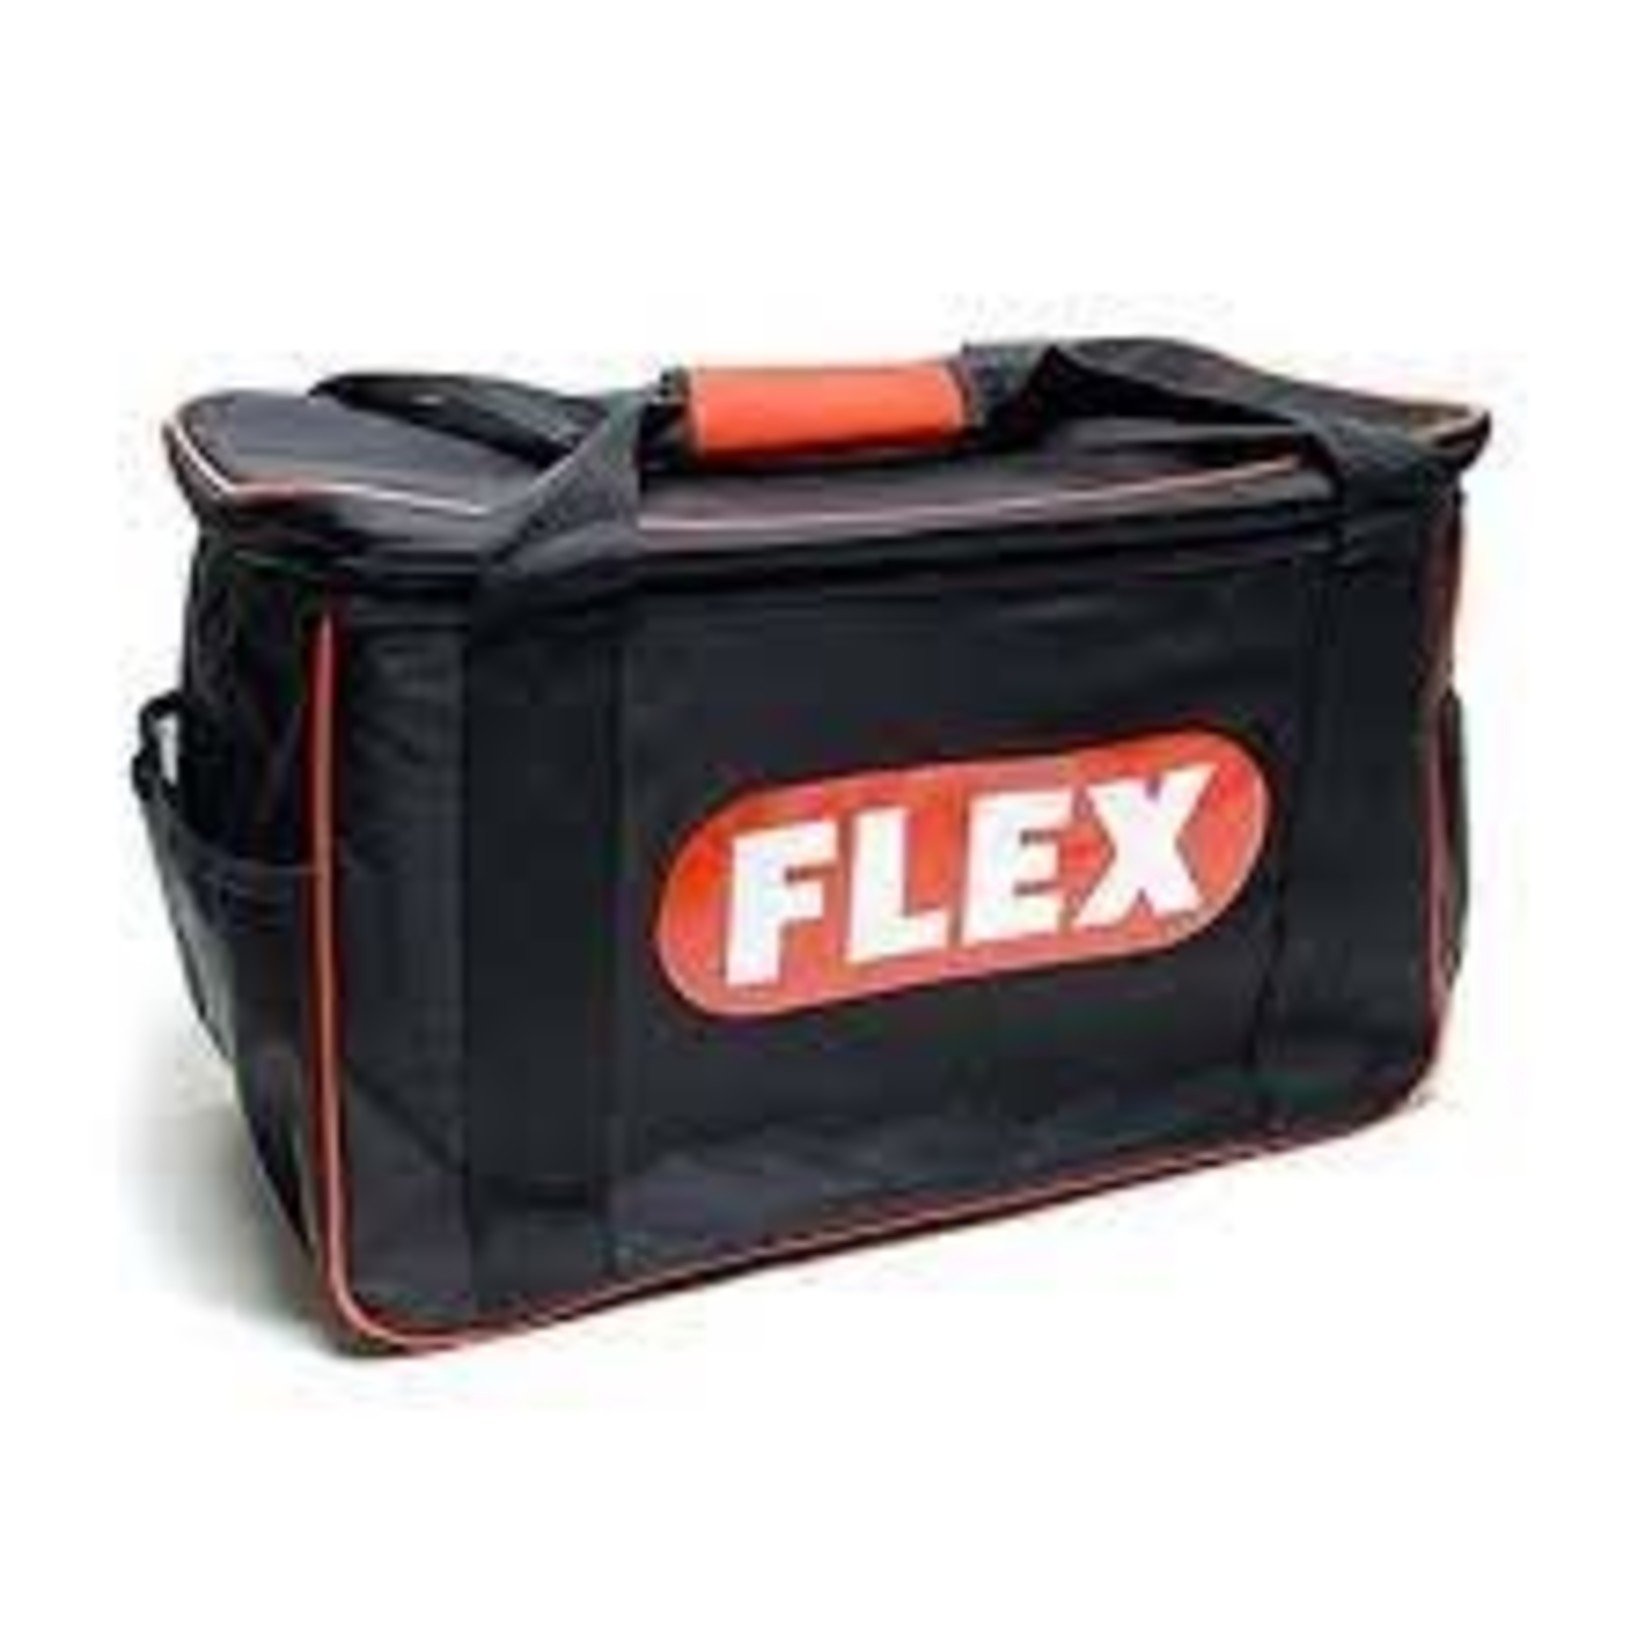 FLEX Flex - Deluxe Polisher Bag